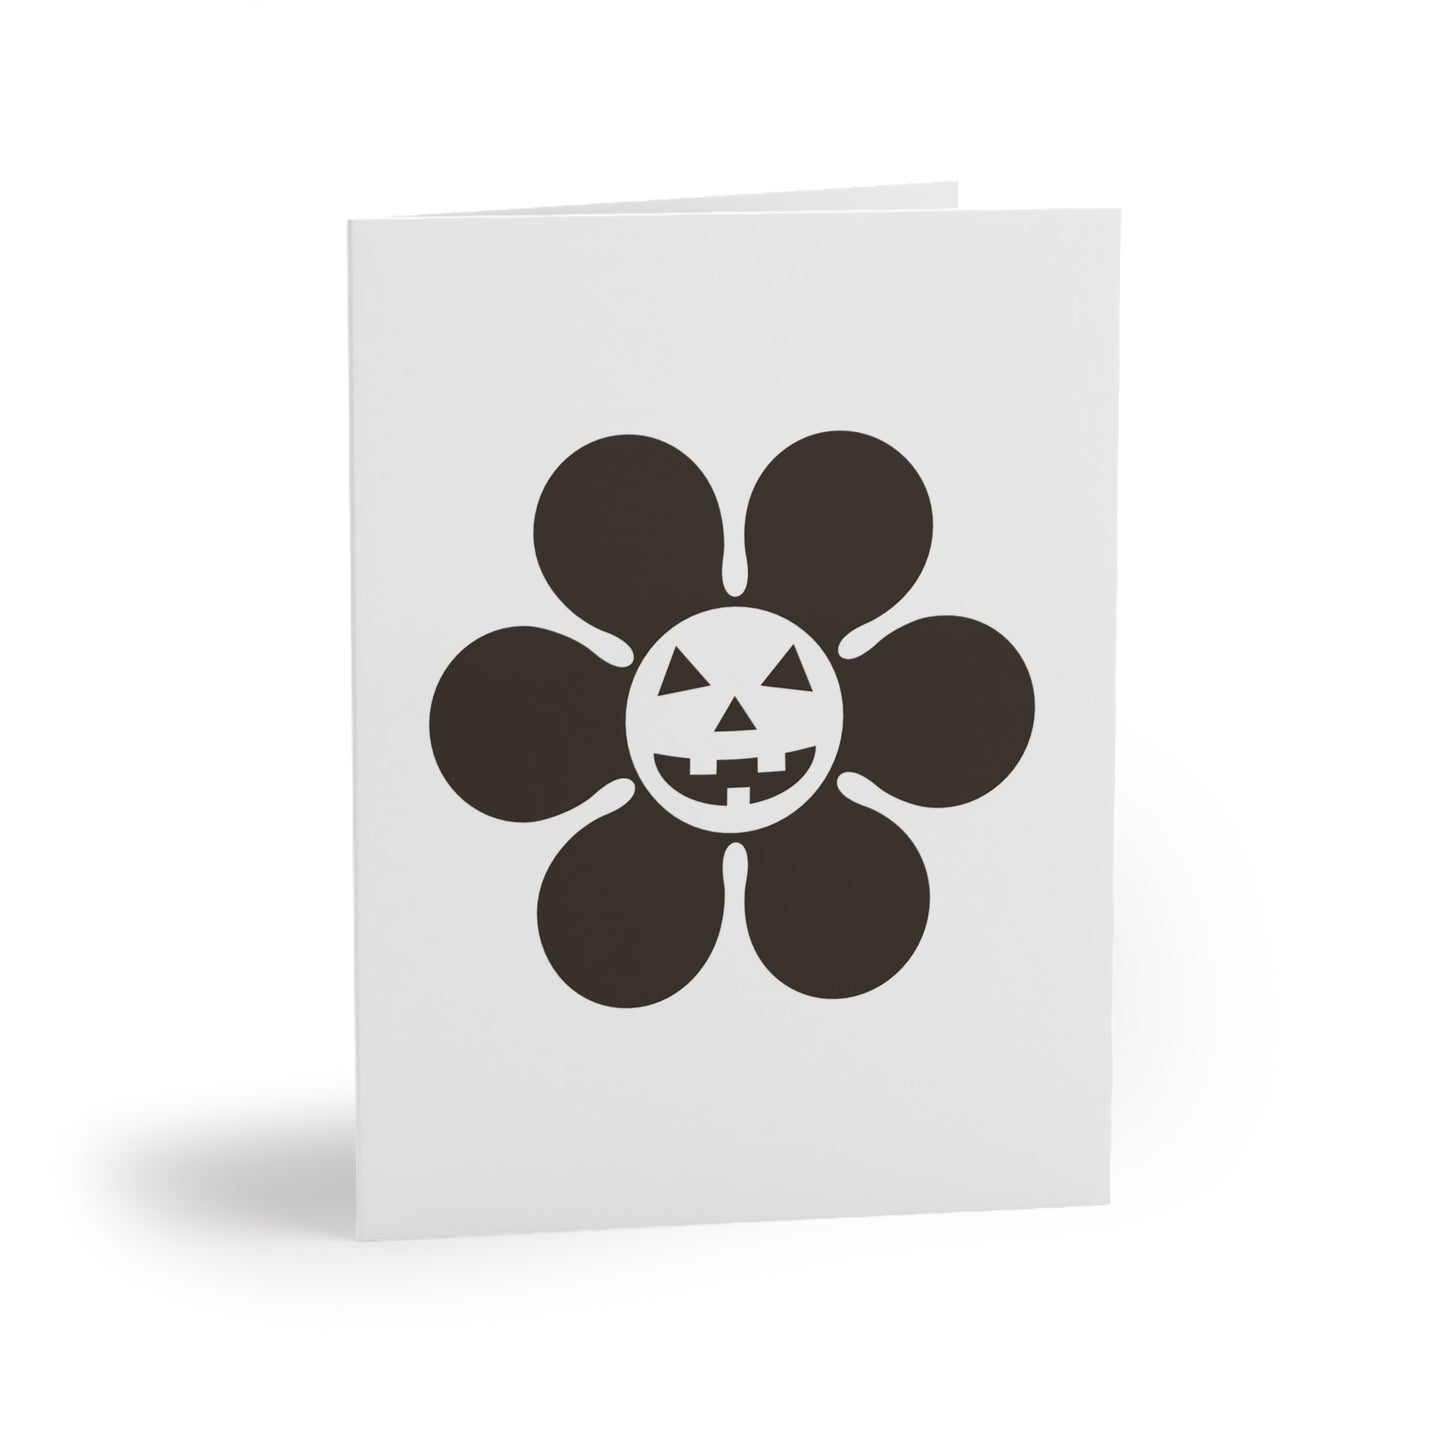 Halloween Greeting Cards - Black & White Daisy (8 pcs)